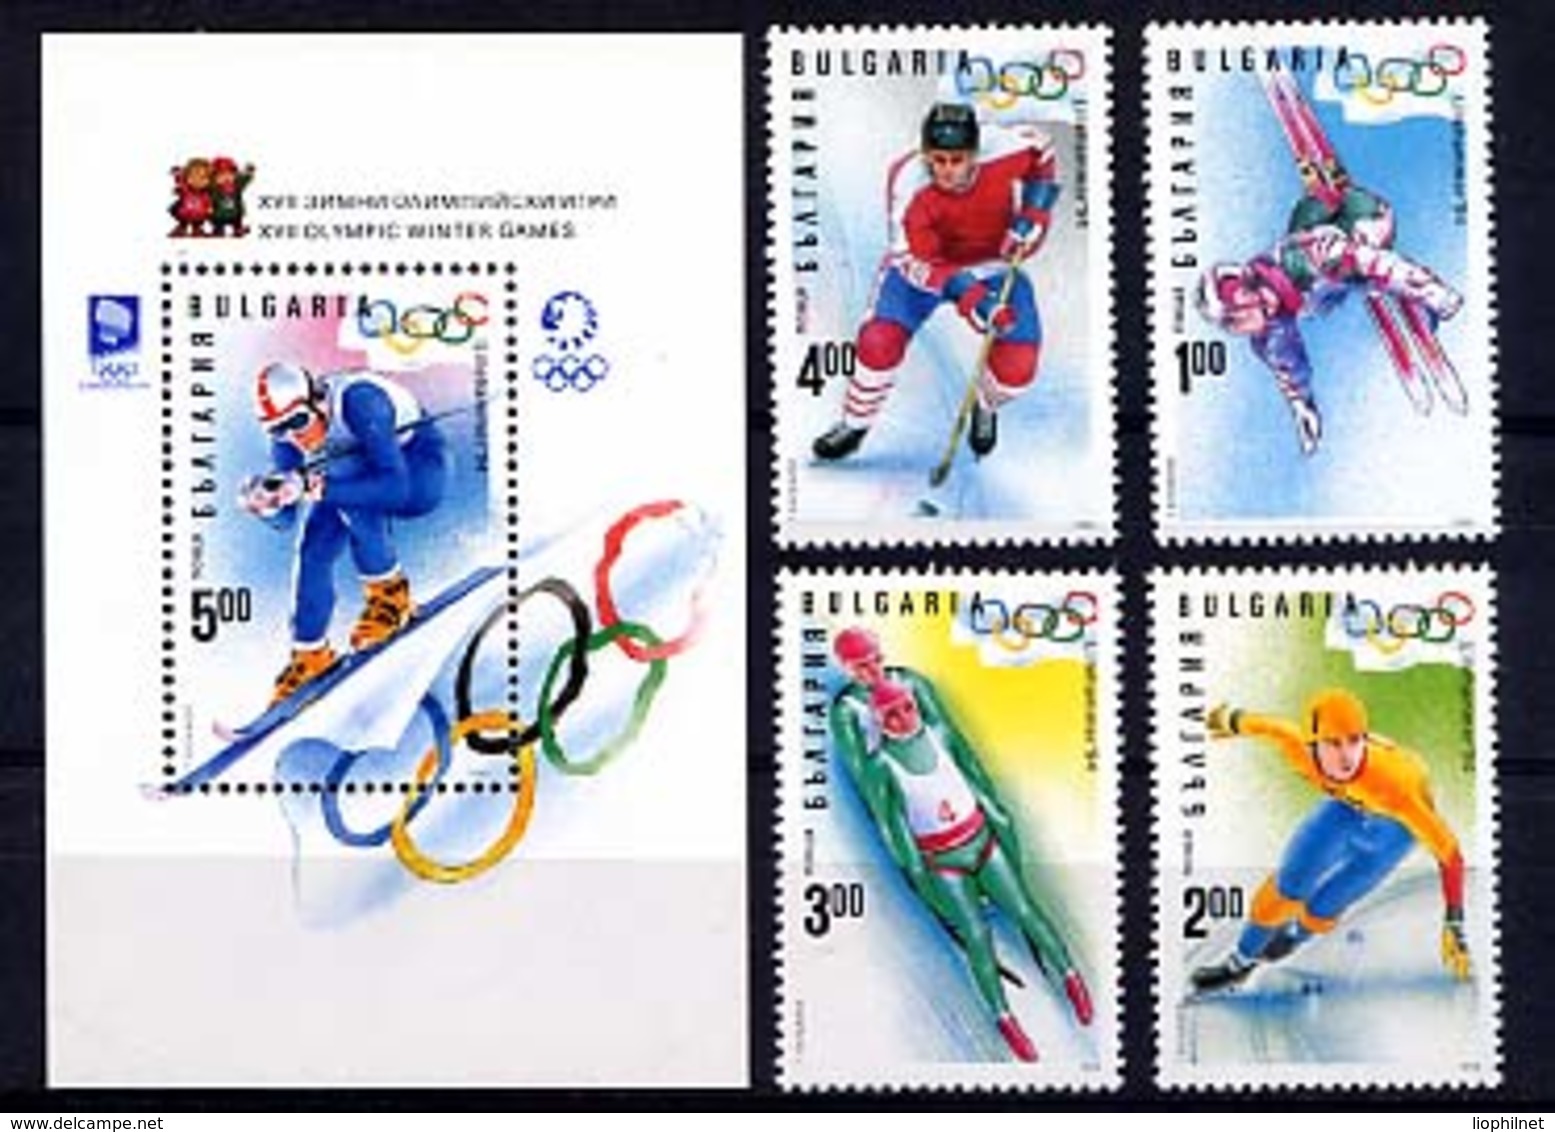 BULGARIE 1994, Lillehammer, Epreuves De Ski, 4 Valeurs + 1 Bloc, Neufs / Mint. R1117 - Invierno 1994: Lillehammer